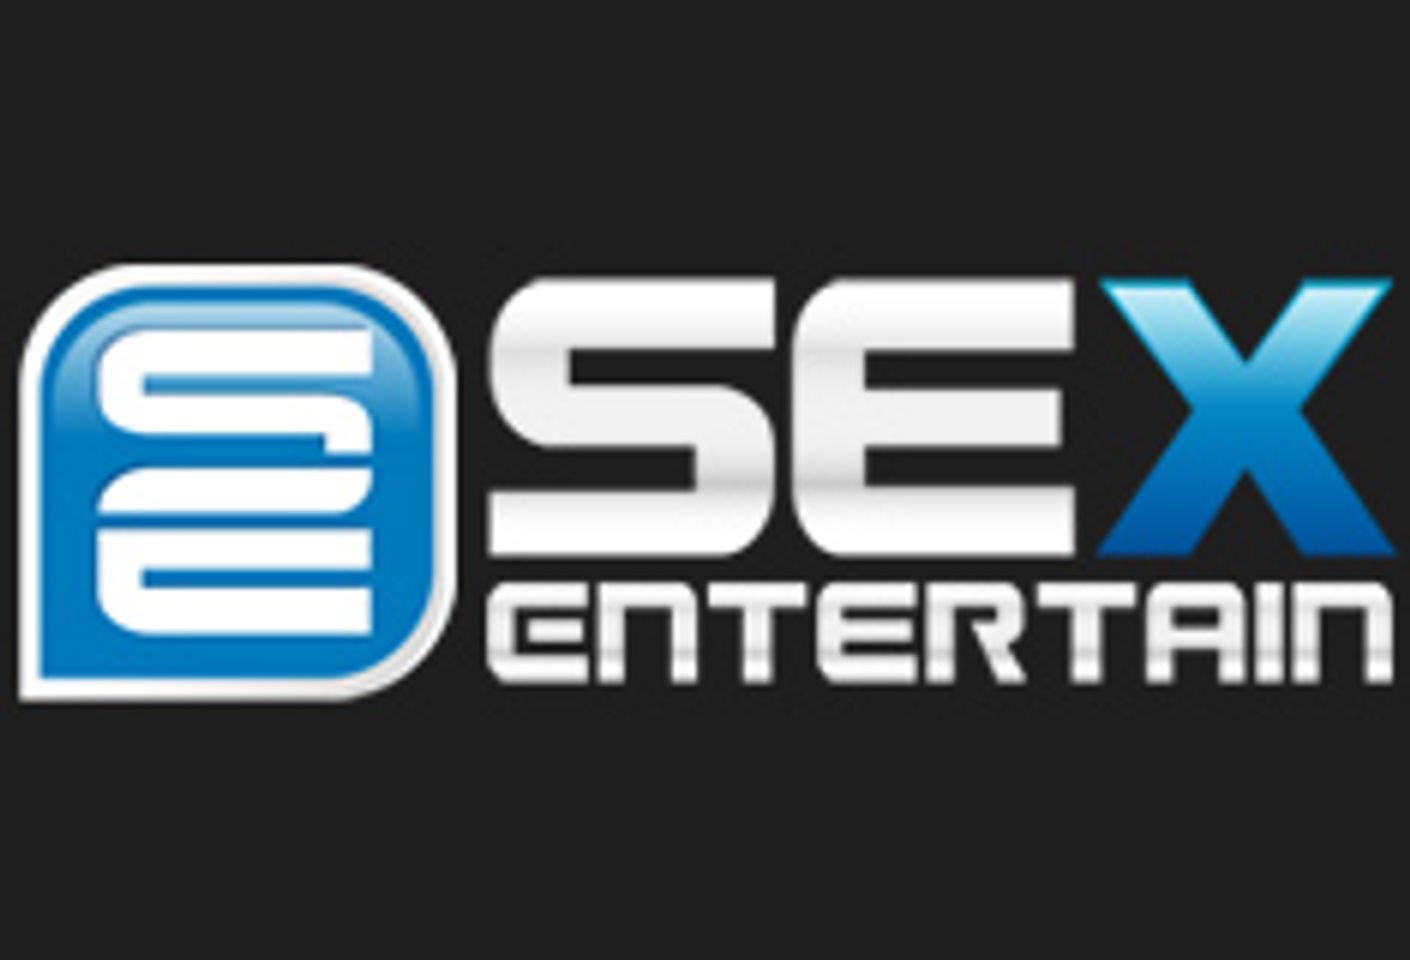 Sexentertain to Demo RTB Software Platform at Phoenix Forum